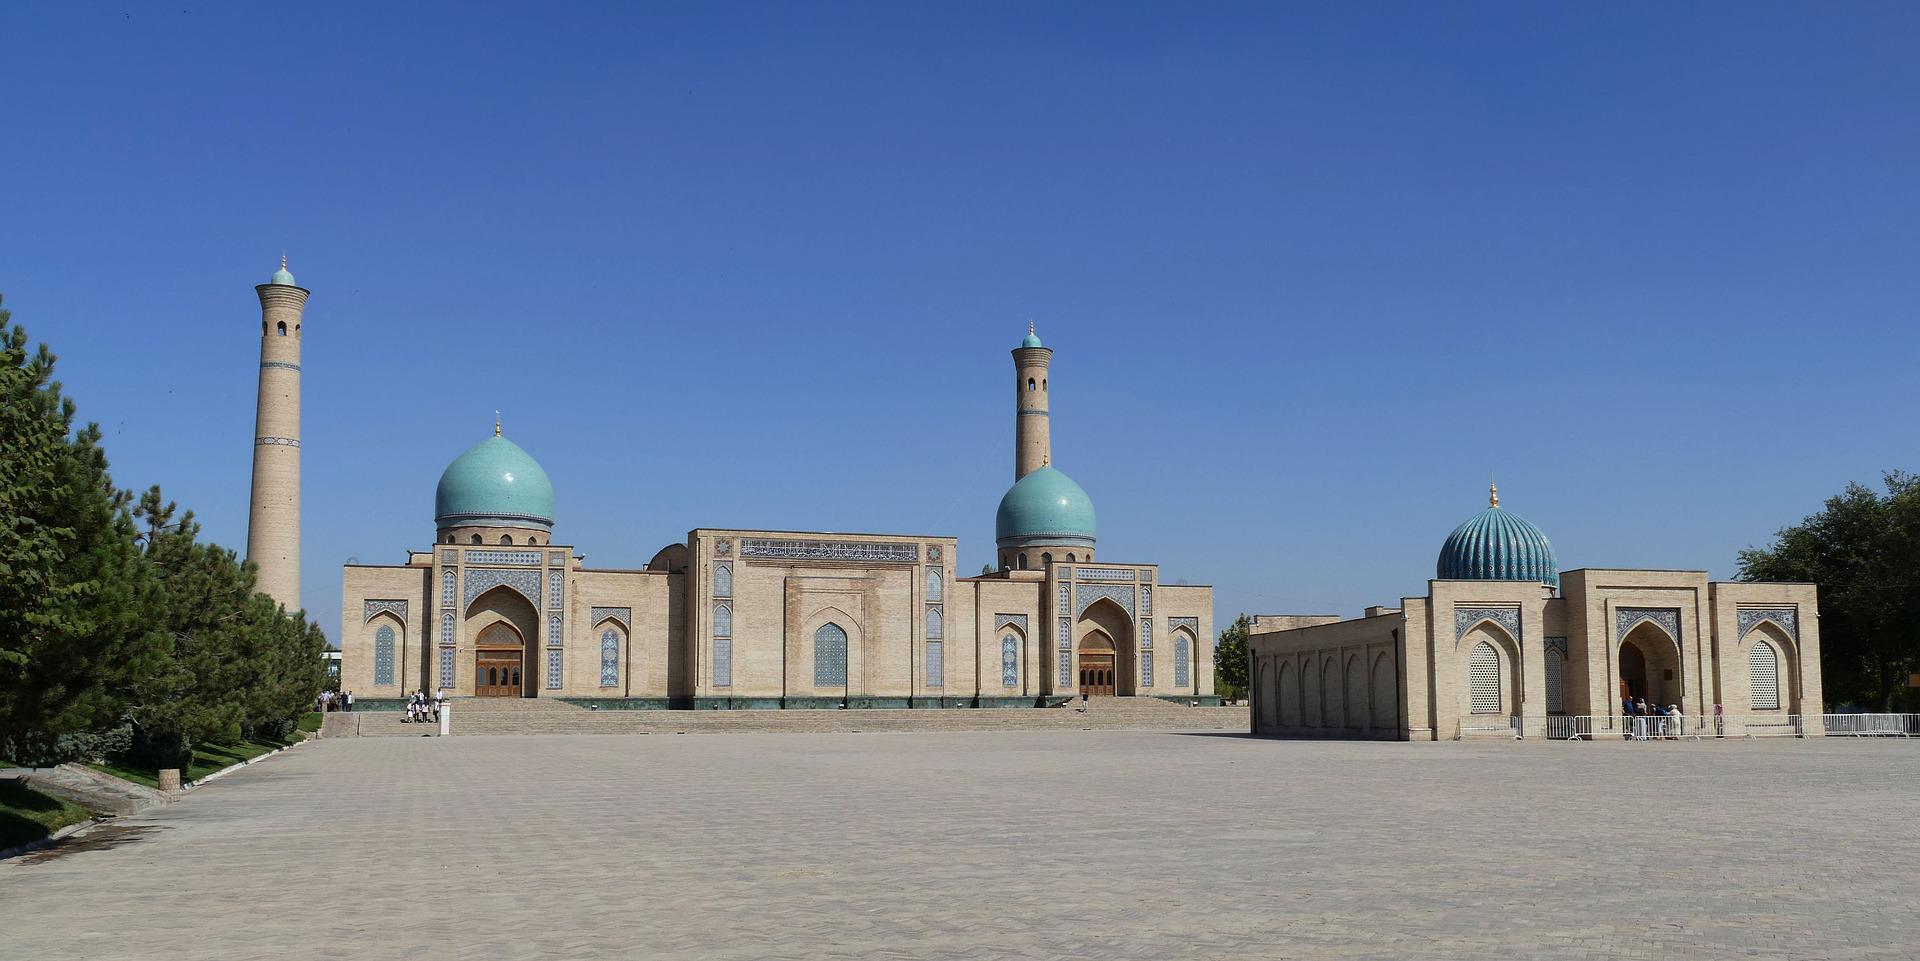 tashkent-4689094_1920.jpg